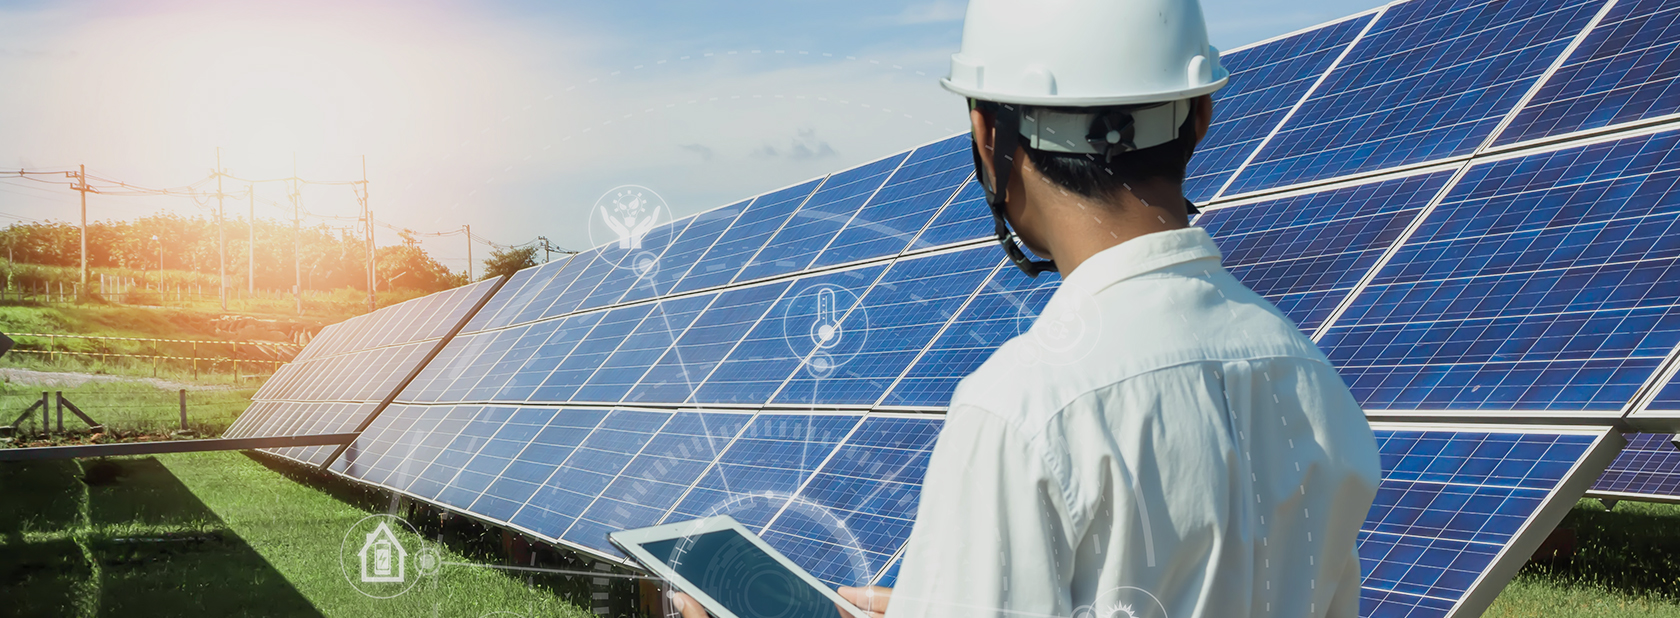 PV Total Solution Provider - HD현대에너지솔루션은 지속적인 R&D 투자와 최첨단 생산 설비 확충으로 세계 최고 수준의 태양광 셀과 모듈을 생산 및 공급하고 있으며, 수상형, 영농형, 스마트 솔라시티 등 다양한 솔루션을 제공하며 태양광 에너지 산업을 선도하고 있습니다.